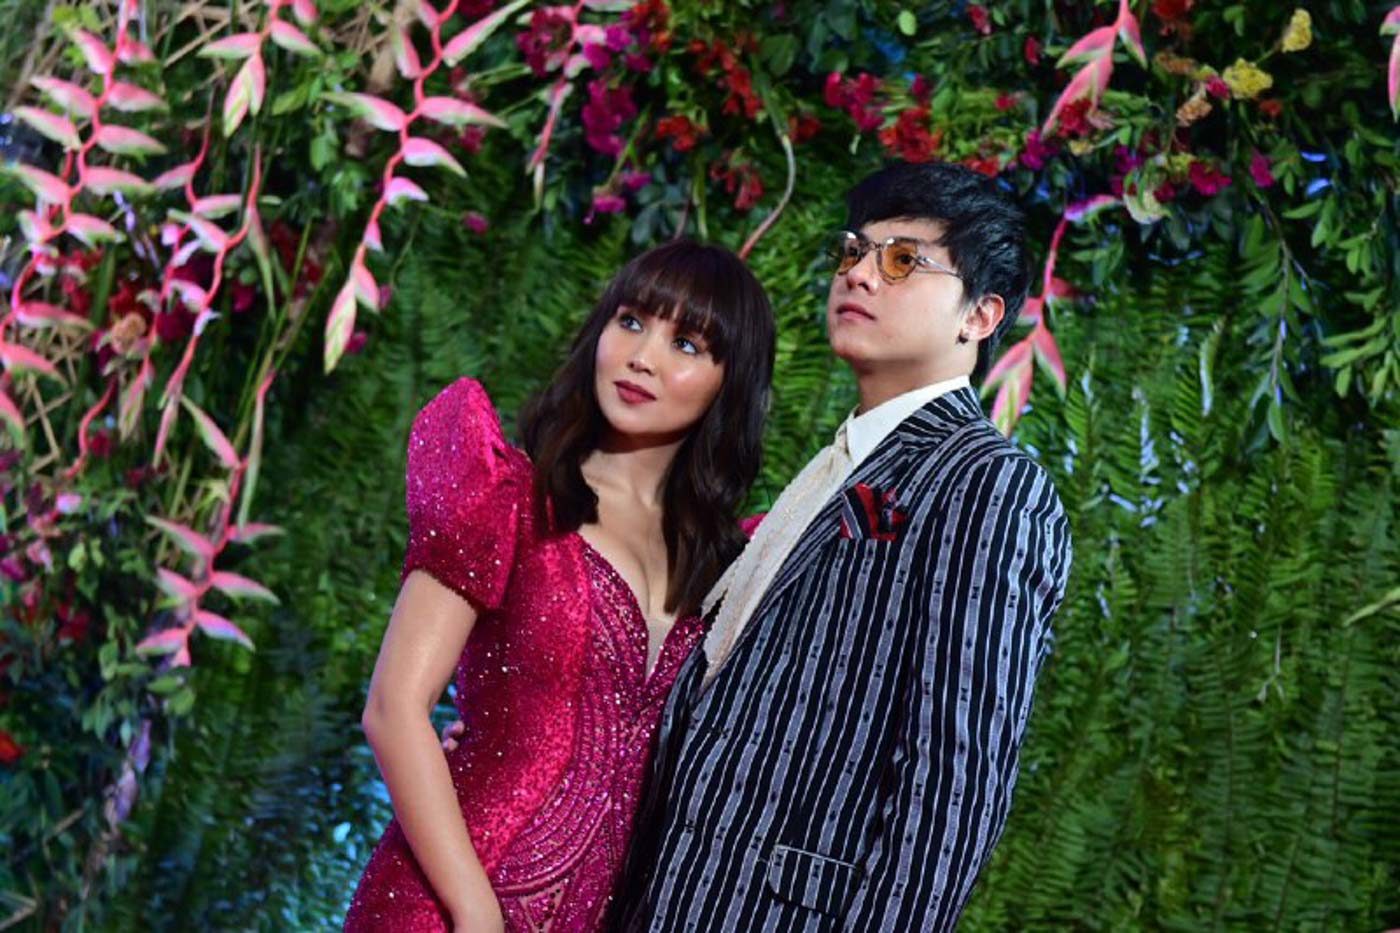 LOOK: Kathryn Bernardo and Daniel Padilla turn heads at the ABS-CBN Ball 2019